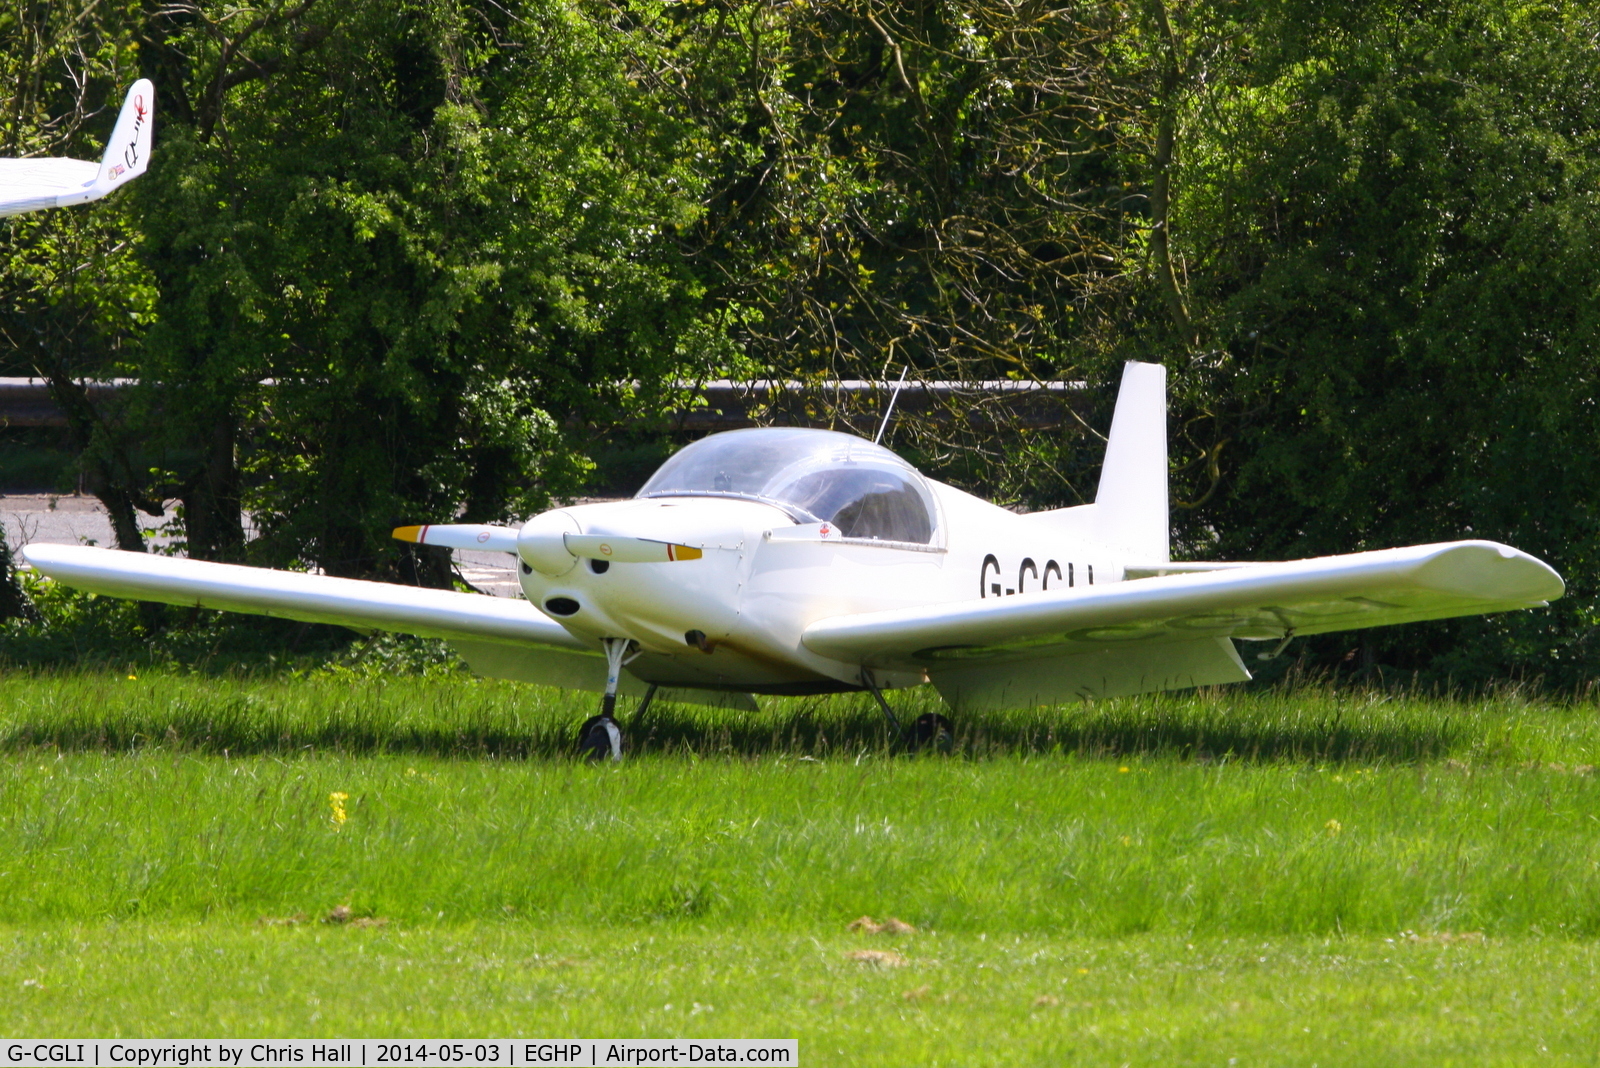 G-CGLI, 2010 Alpi Aviation Pioneer 200-M C/N LAA 334-14919, at the 2014 Microlight Trade Fair, Popham